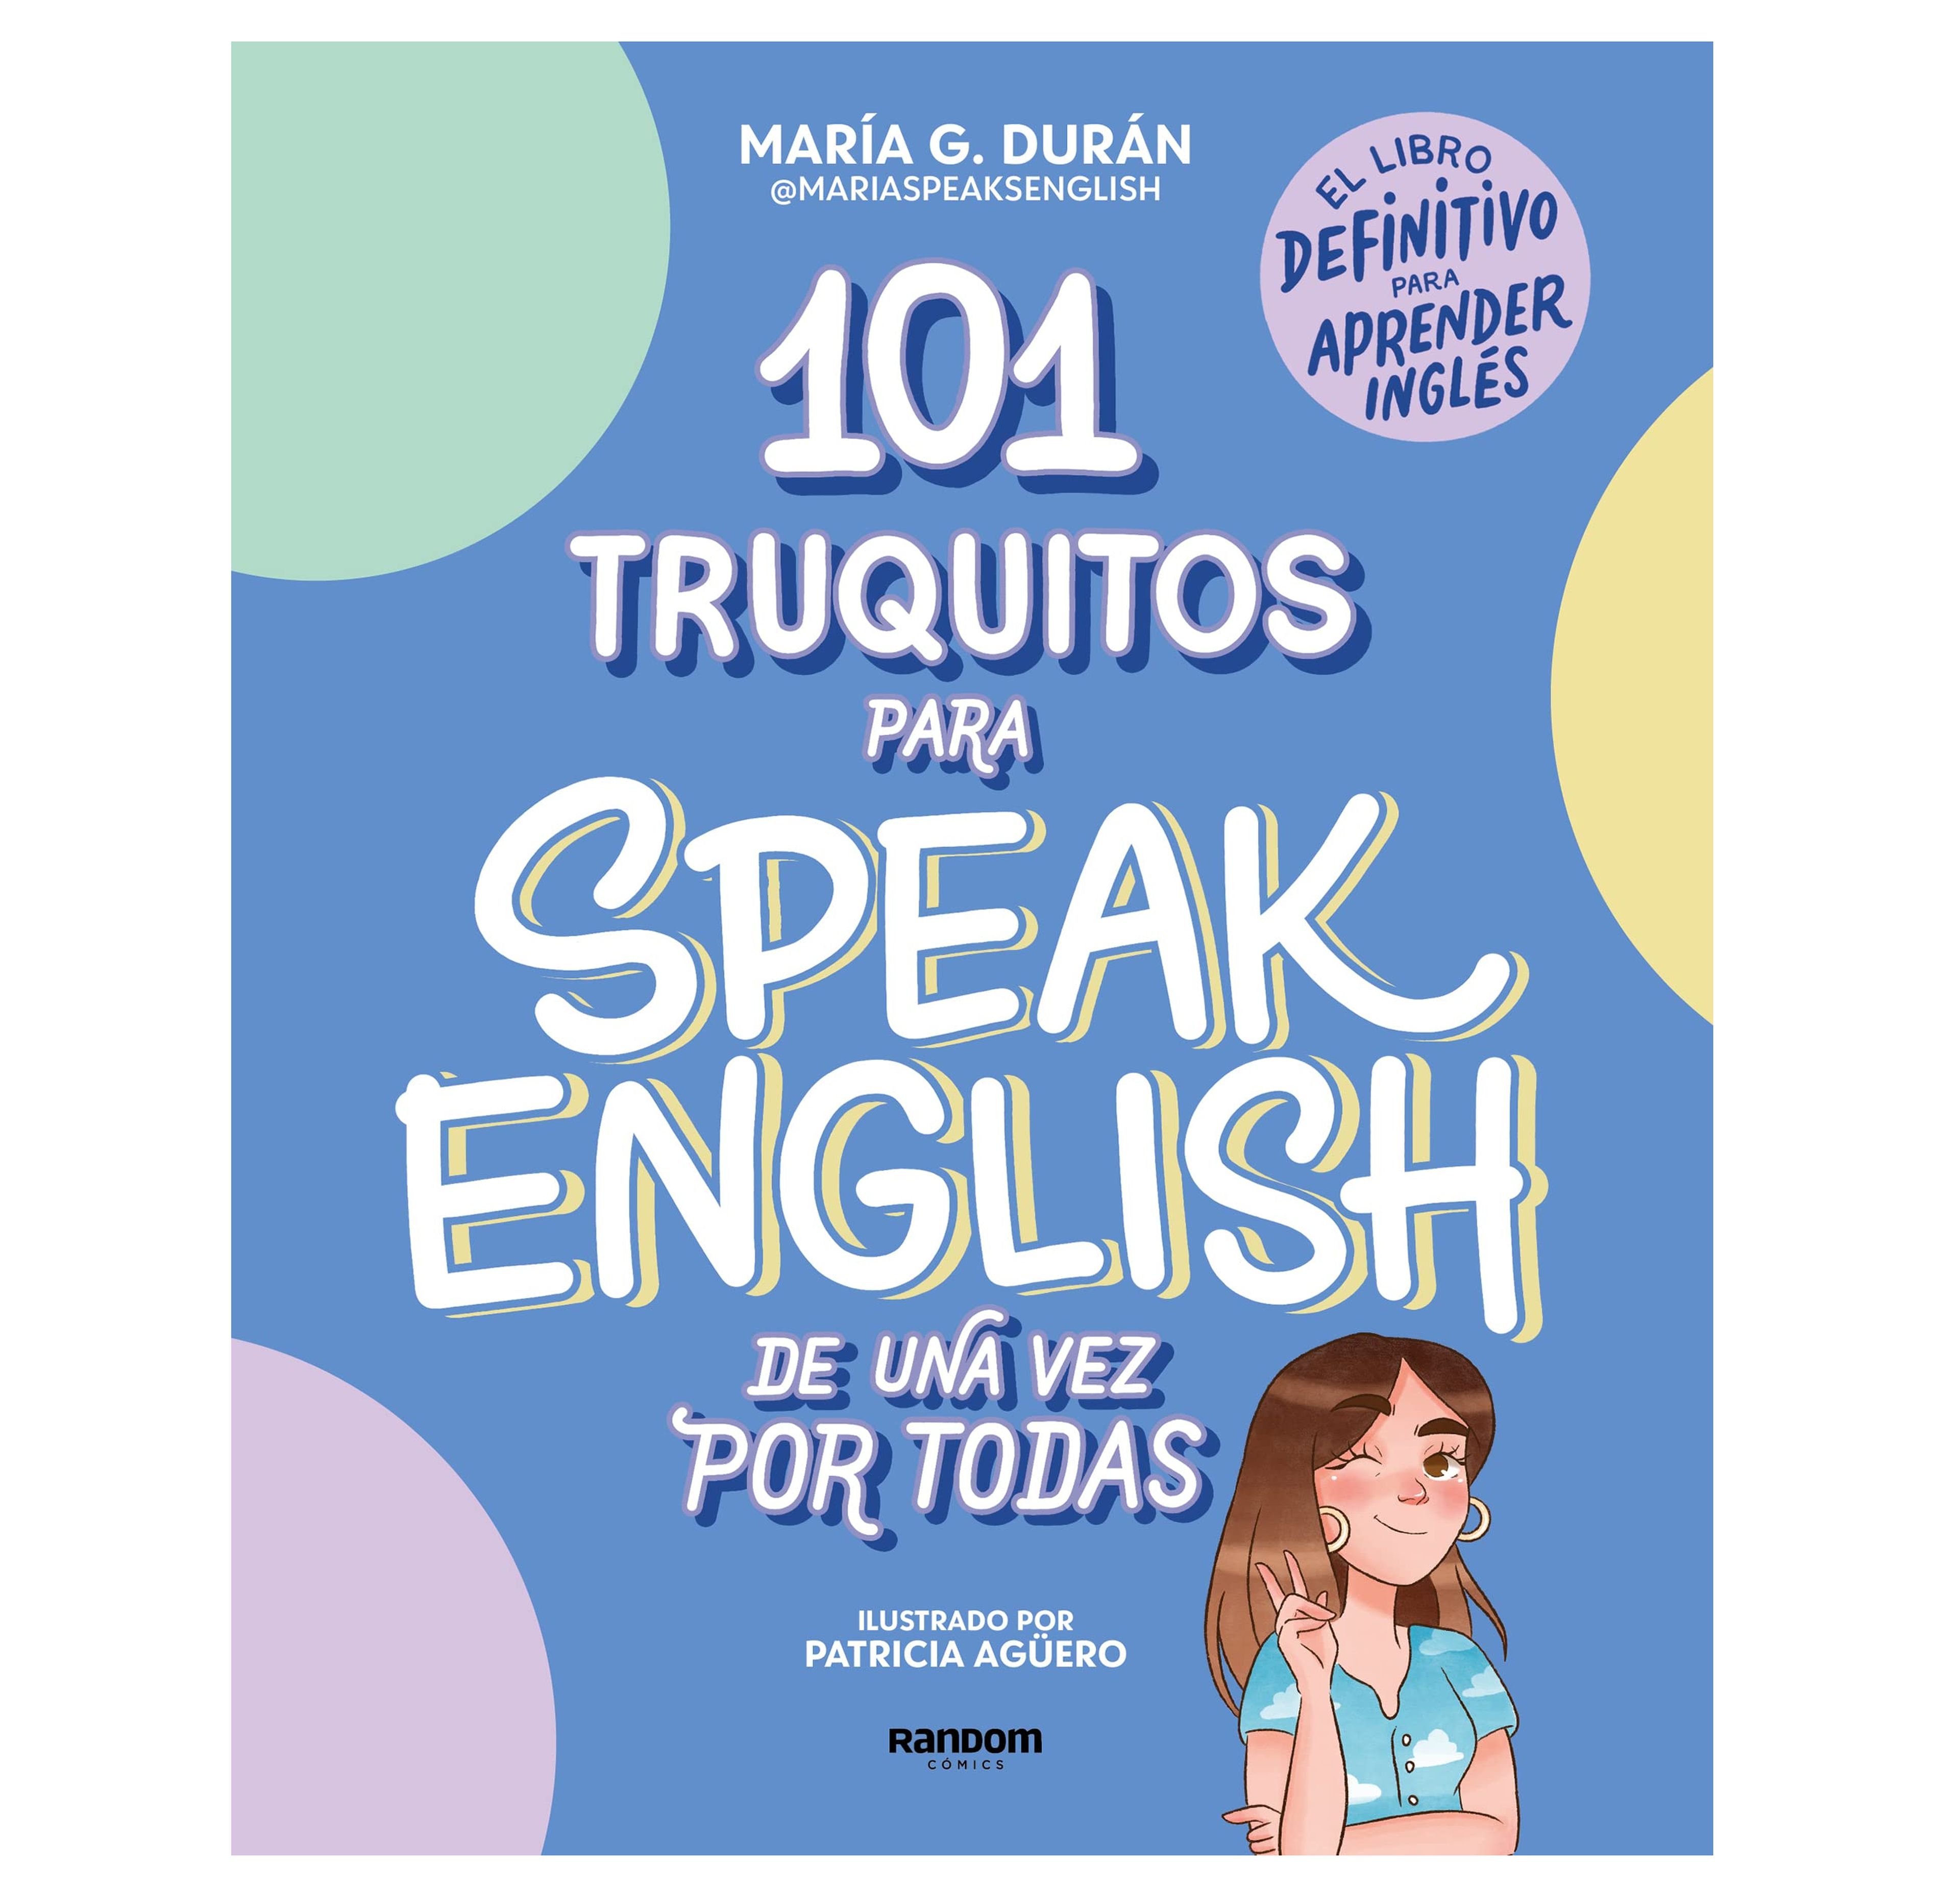 Mejores libros para aprender inglés fácilmente